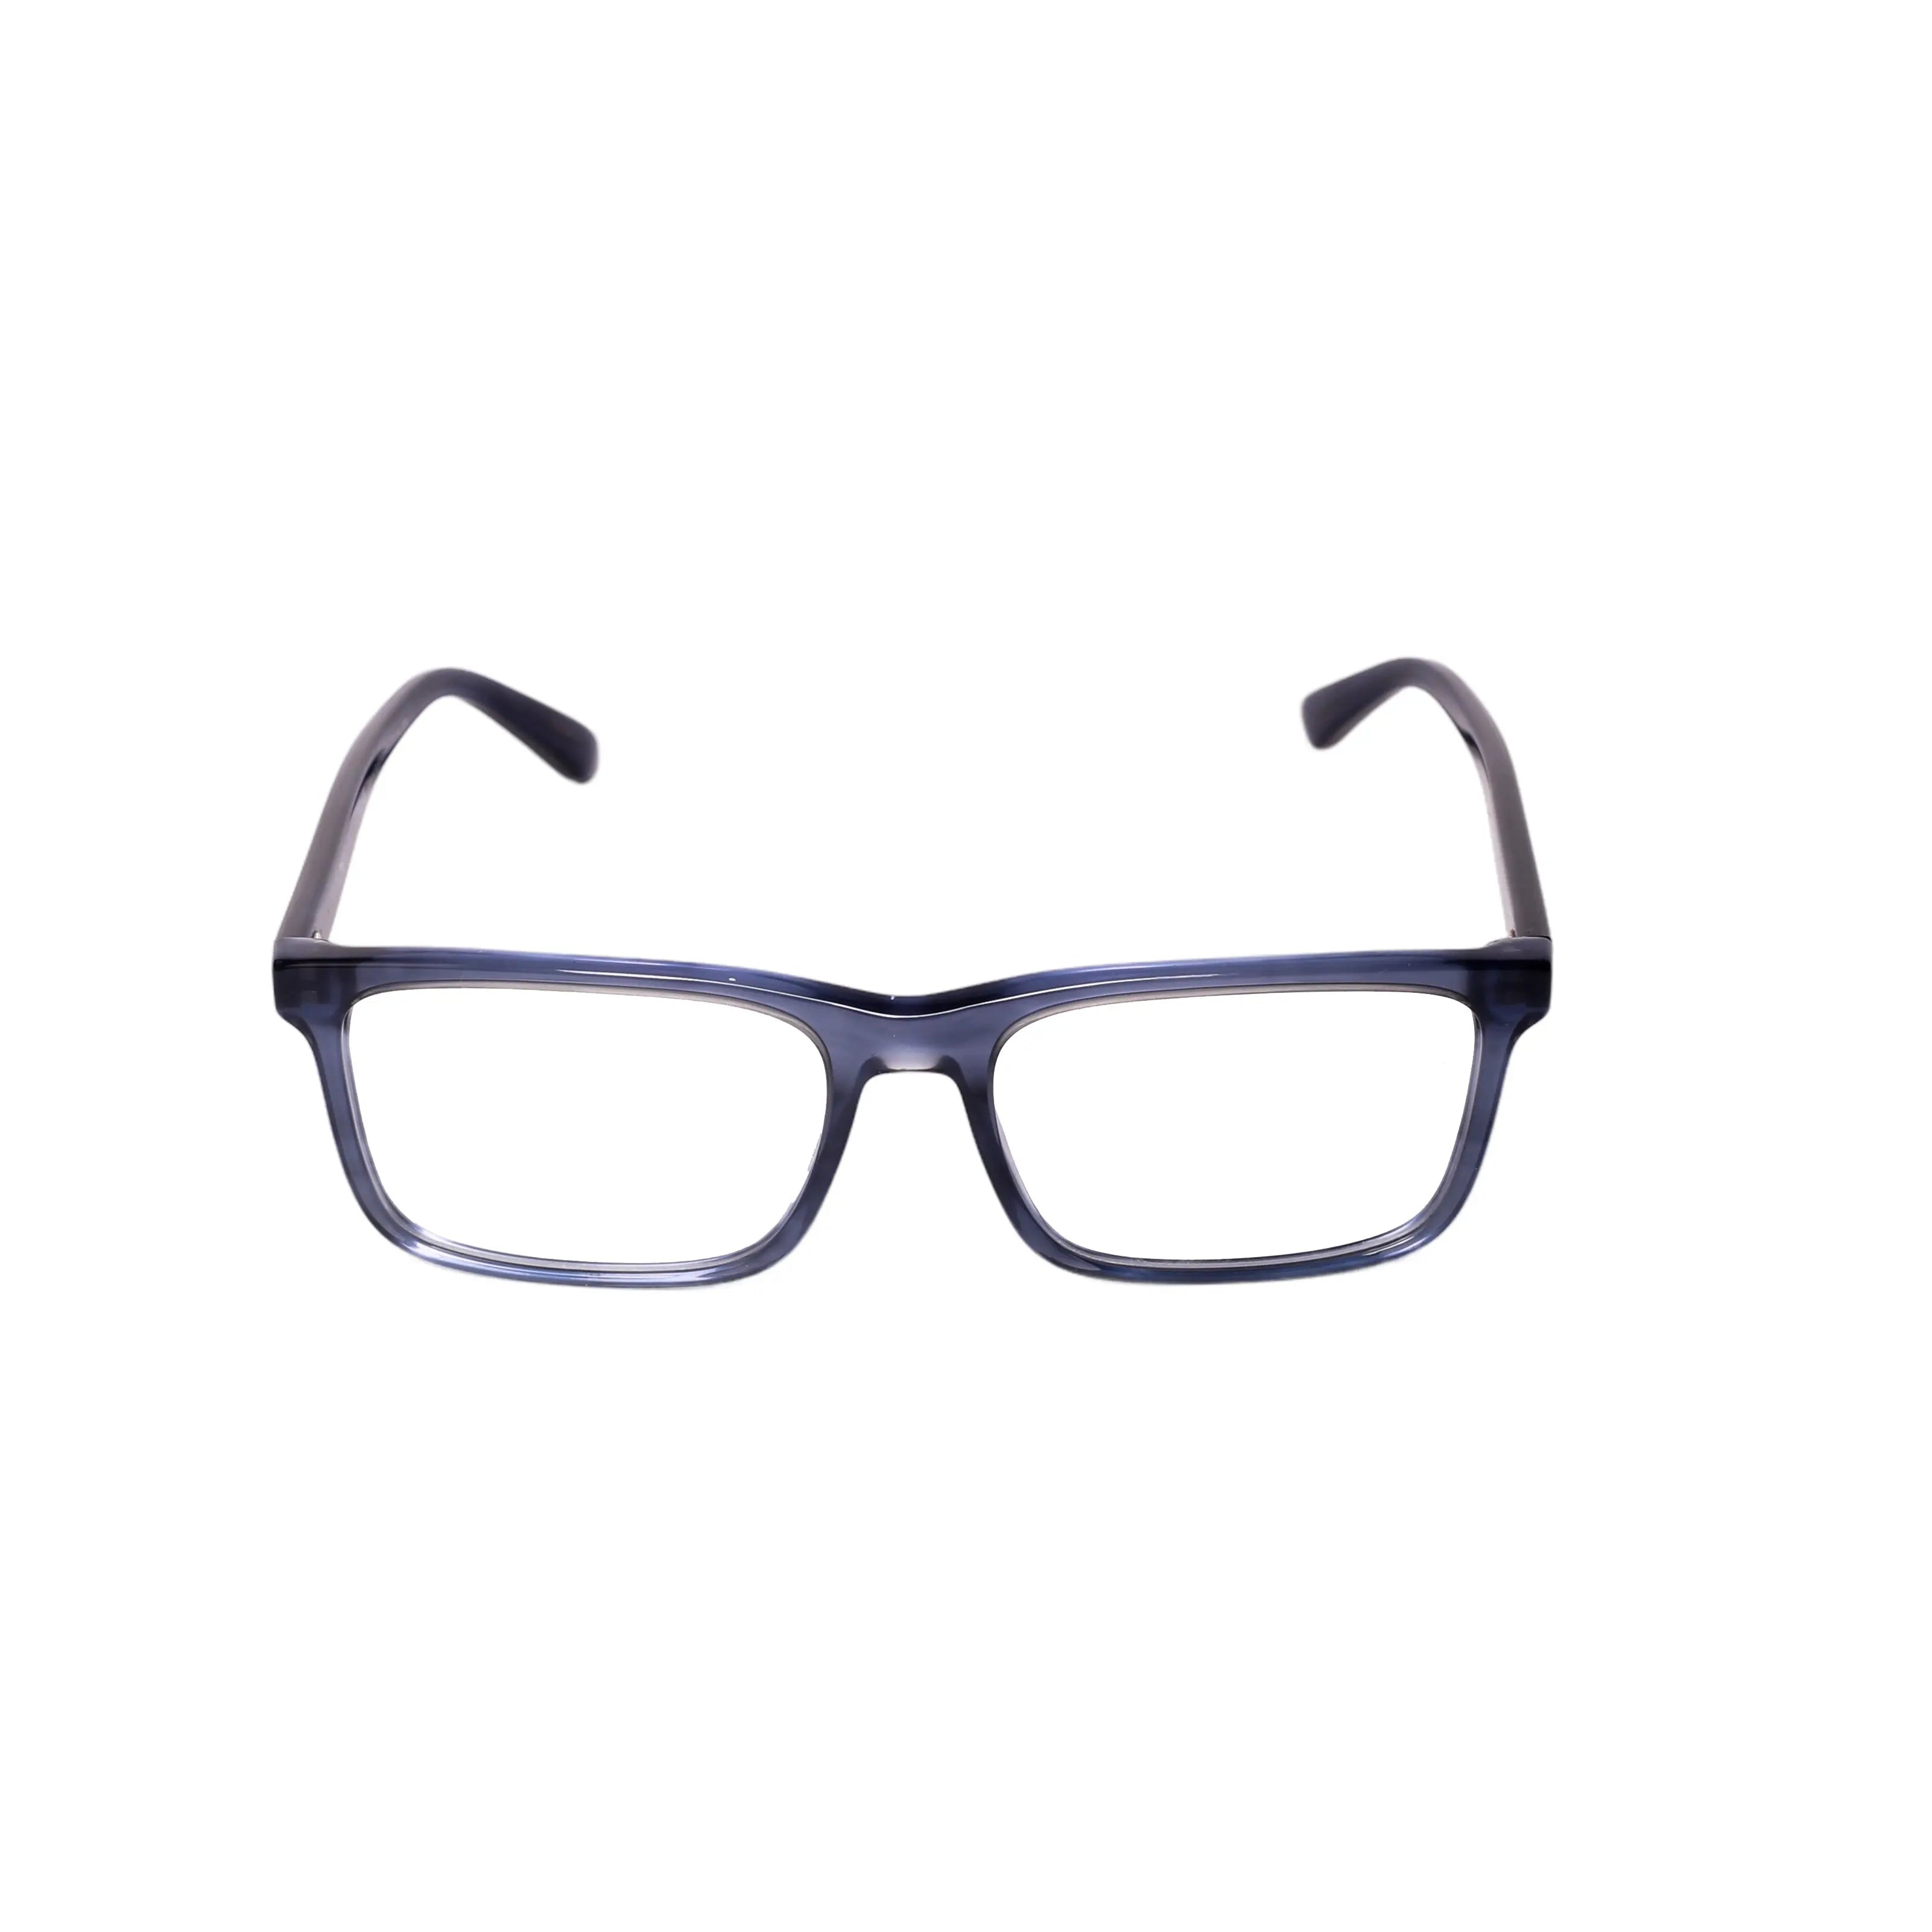 Emporio Armani-EA 3227-56-6054 Eyeglasses - Premium Eyeglasses from Emporio Armani - Just Rs. 11290! Shop now at Laxmi Opticians